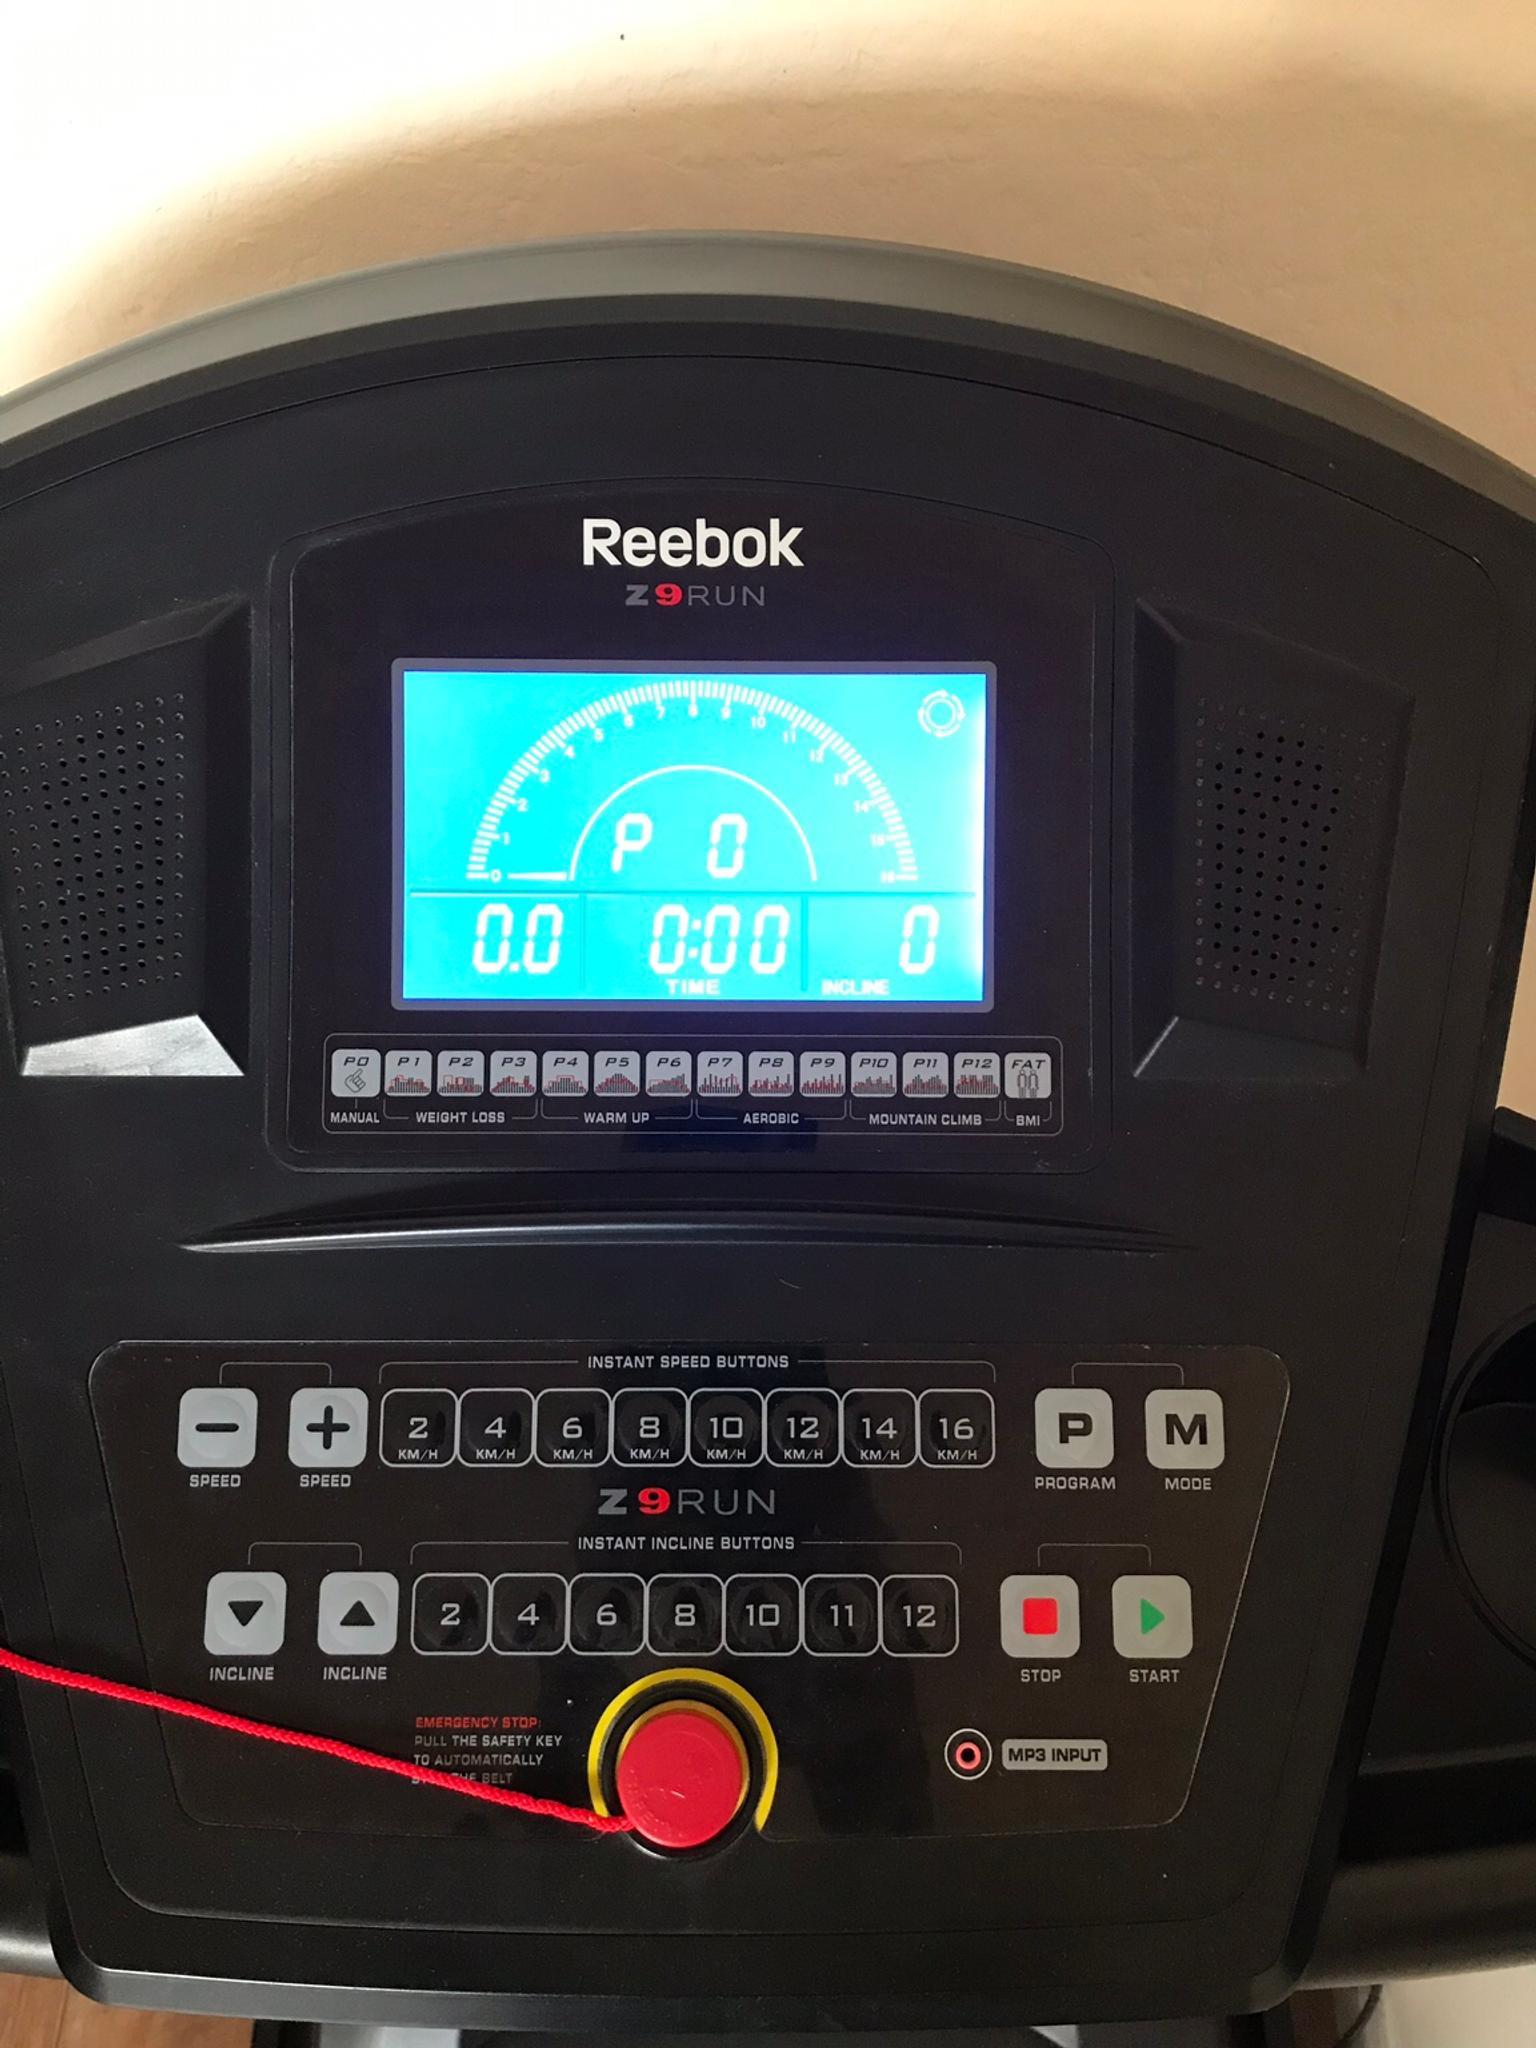 reebok z9 run treadmill manual